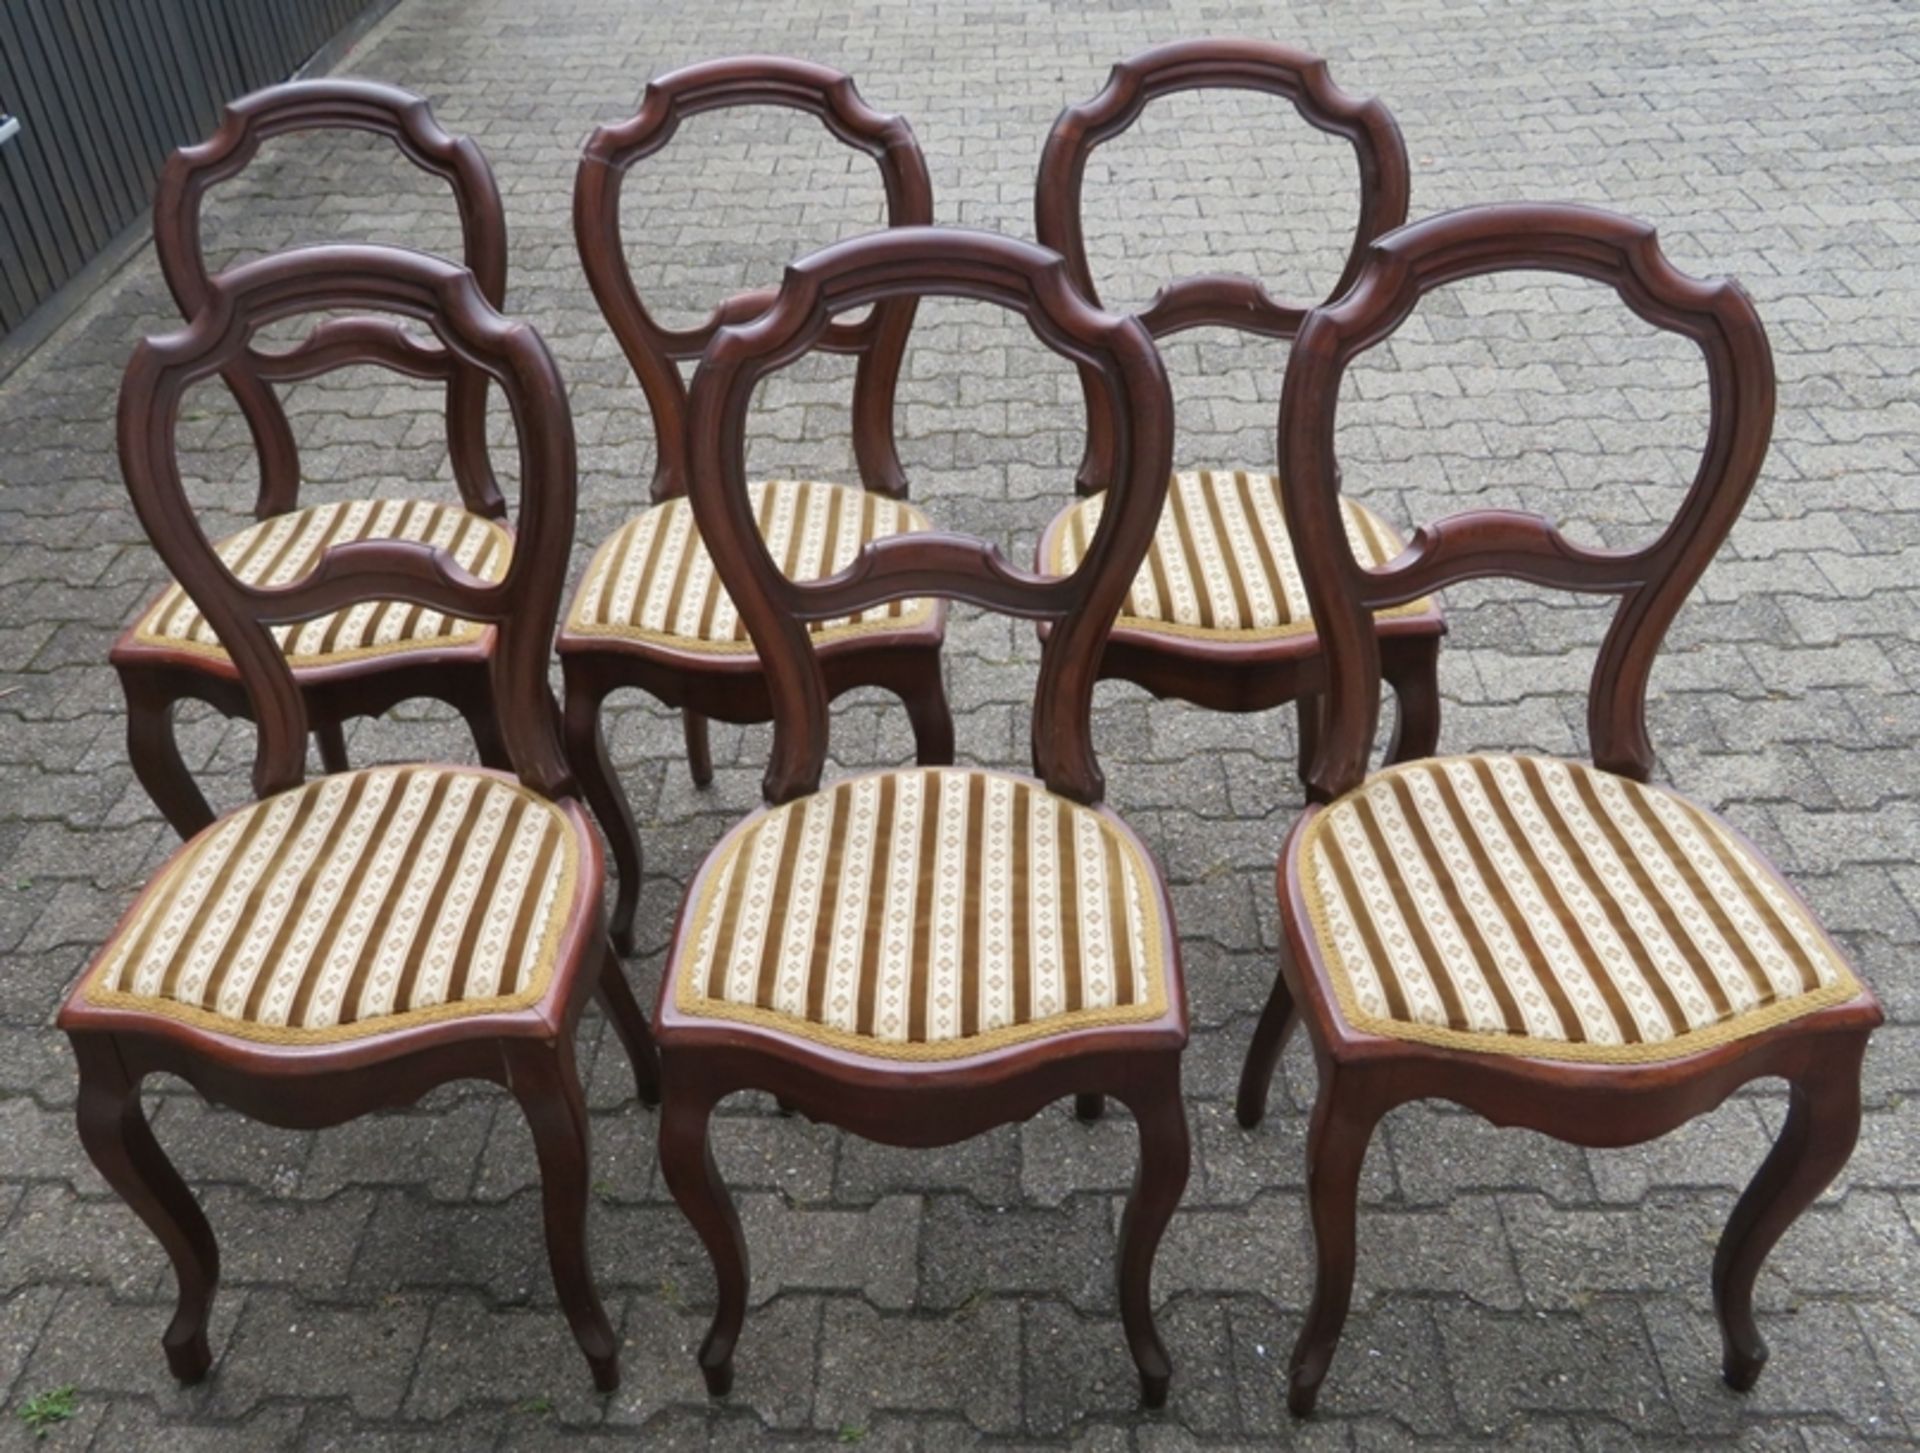 6 Stühle, Louis Philippe, um 1860, Mahagoni, besch., 95 x 43 x 45 cm.